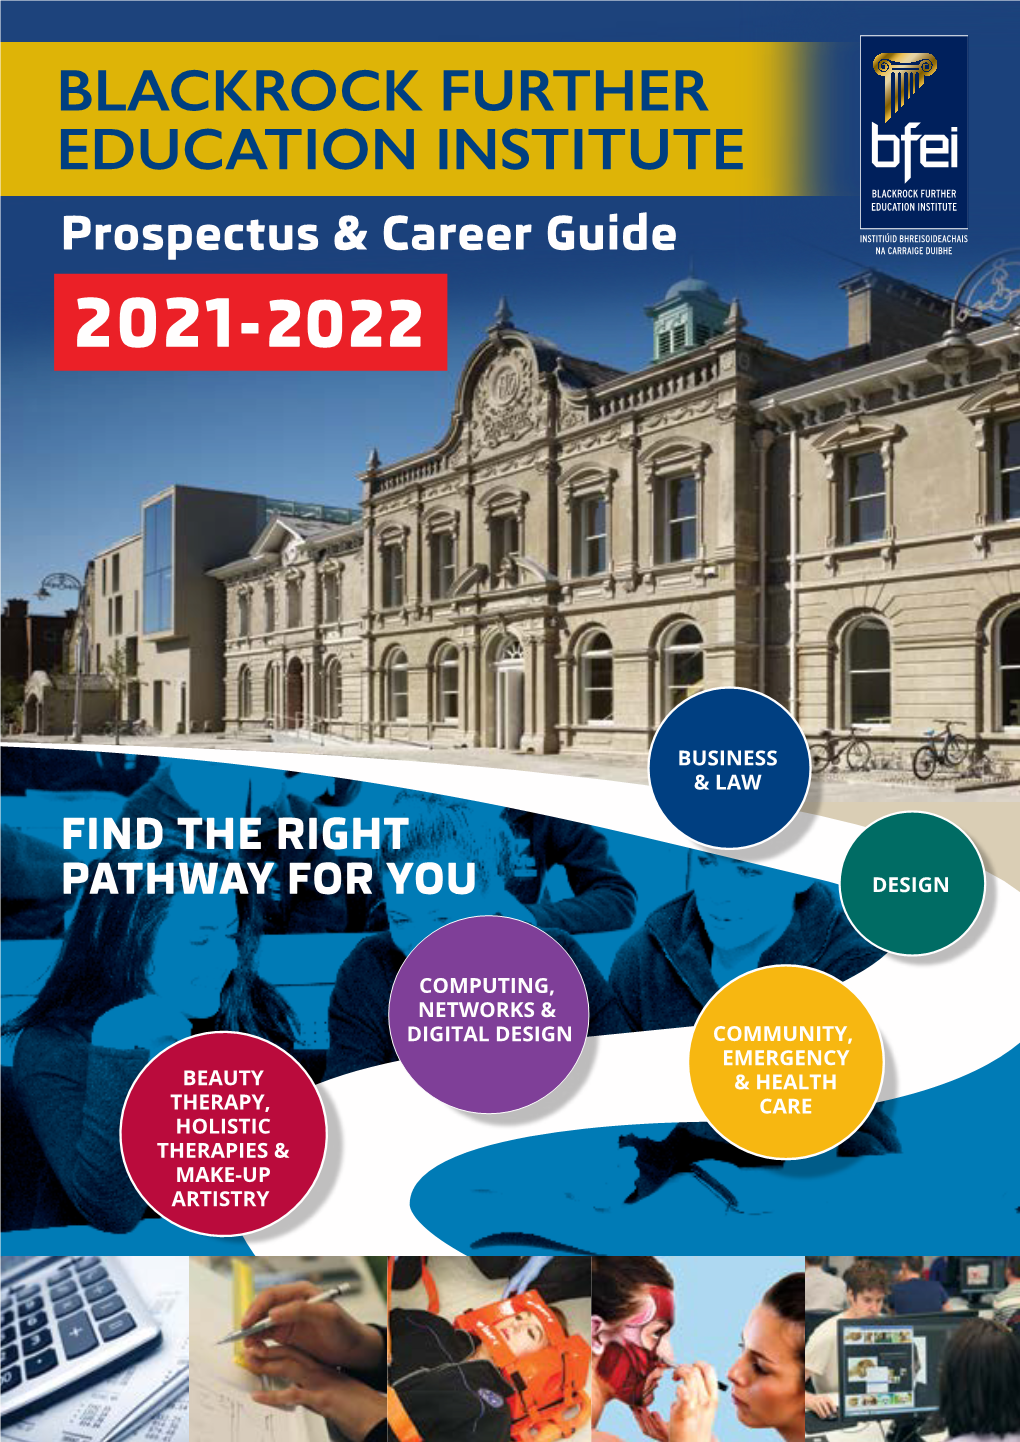 BLACKROCK FURTHER EDUCATION INSTITUTE Prospectus & Career Guide 2020-2021-20202122